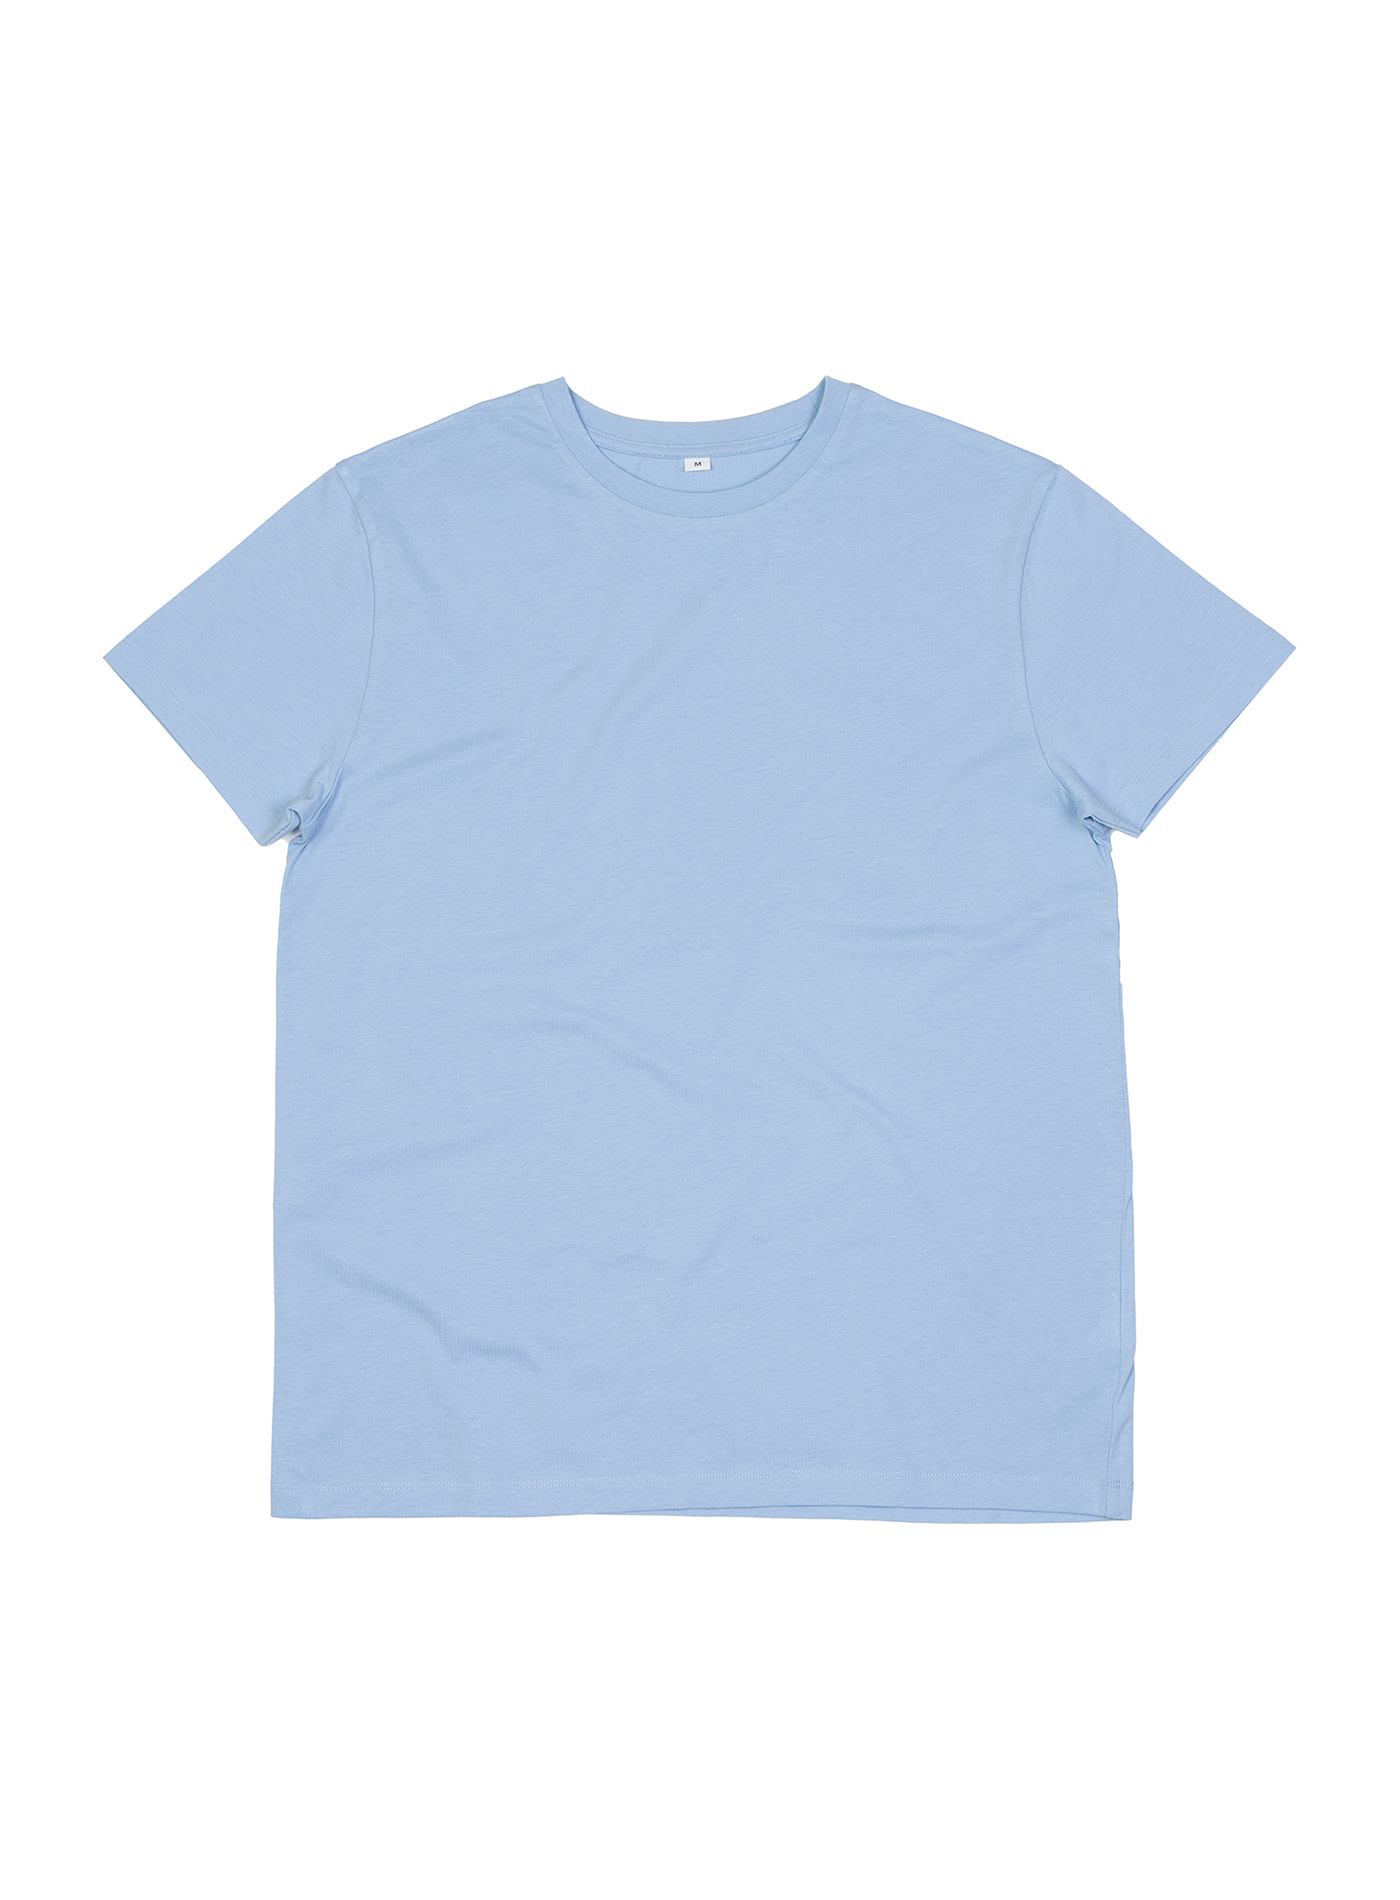 Pánské tričko Mantis Essential Organic - Blankytně modrá M